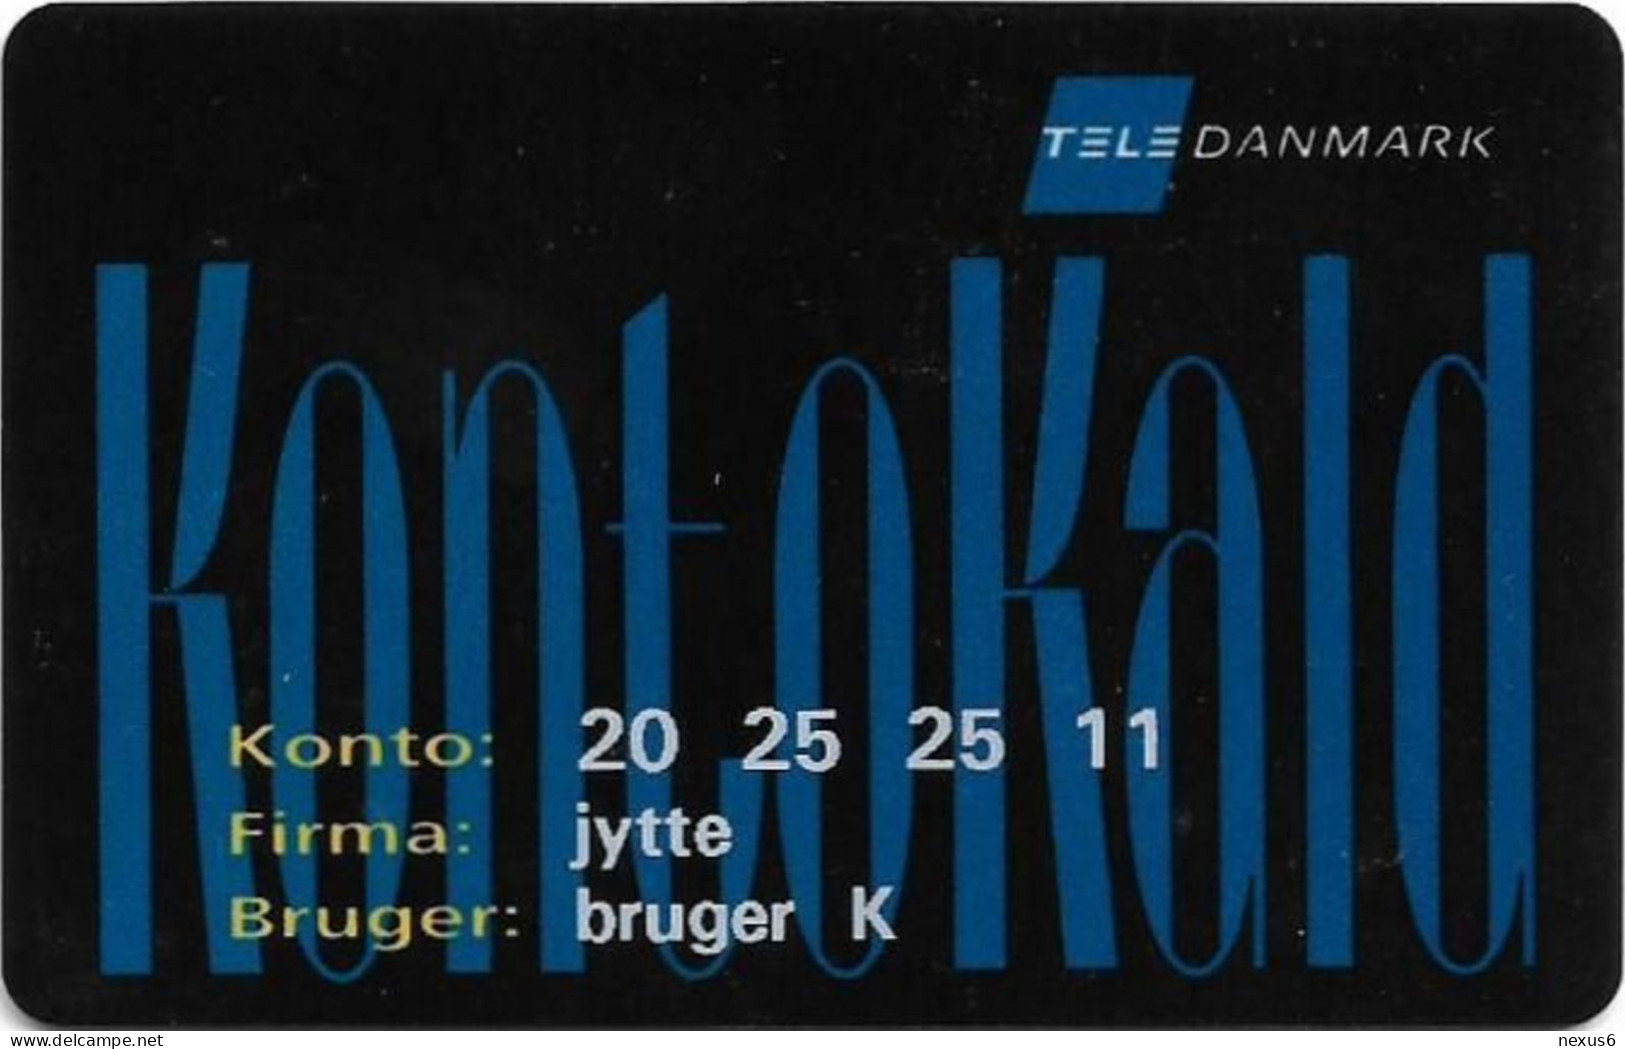 Denmark - Tele Danmark - KON-DEN-003 - Kontokald (Blue) Magnetic Creditcard, Used - Denmark